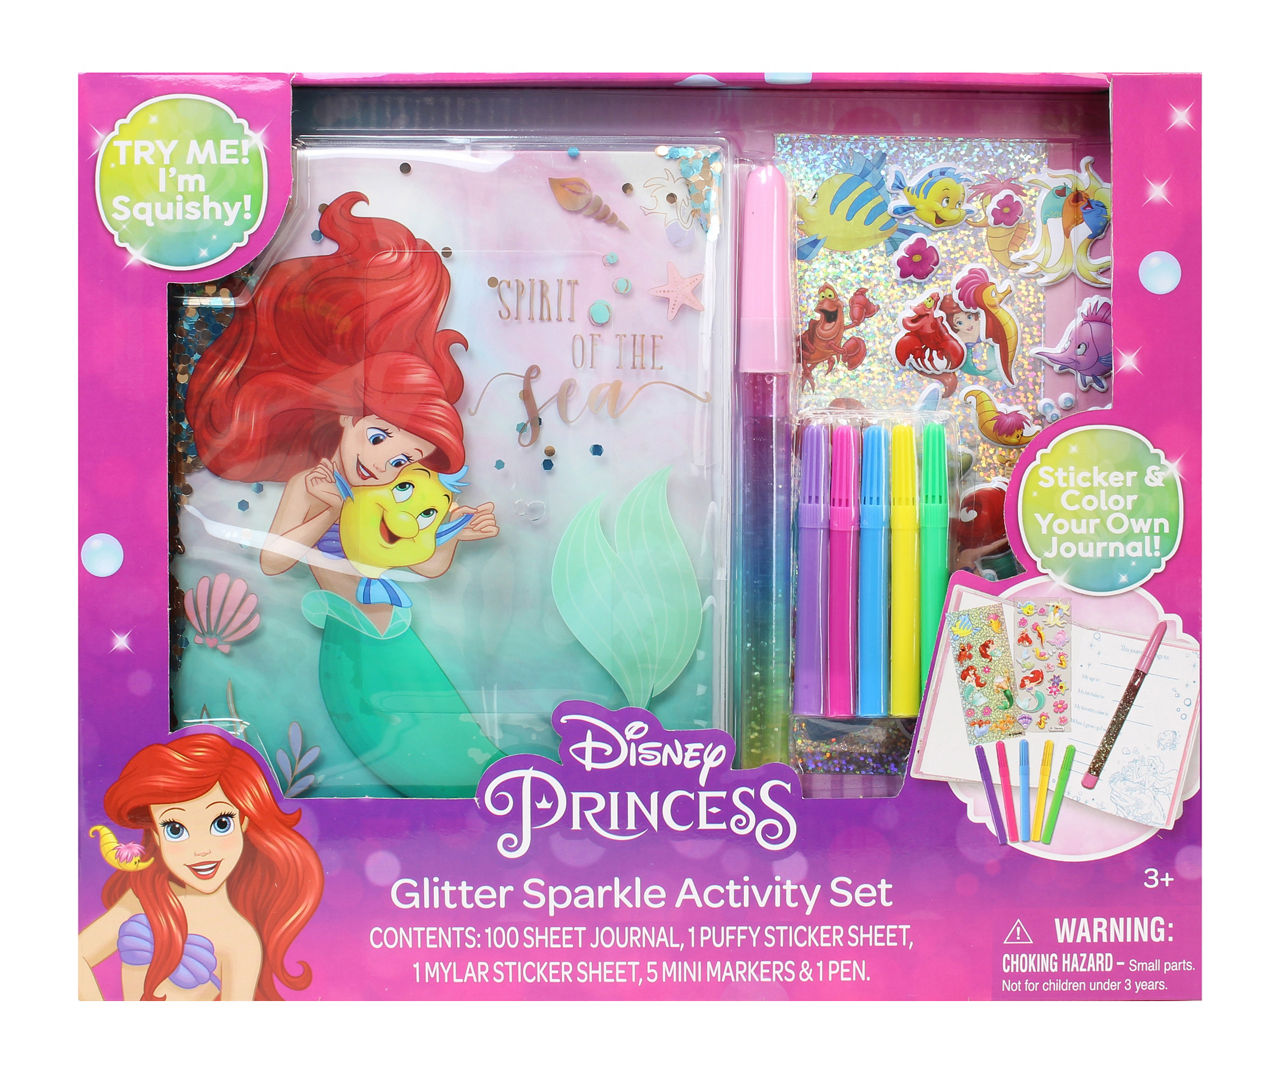 Disney Princess Activity Kit